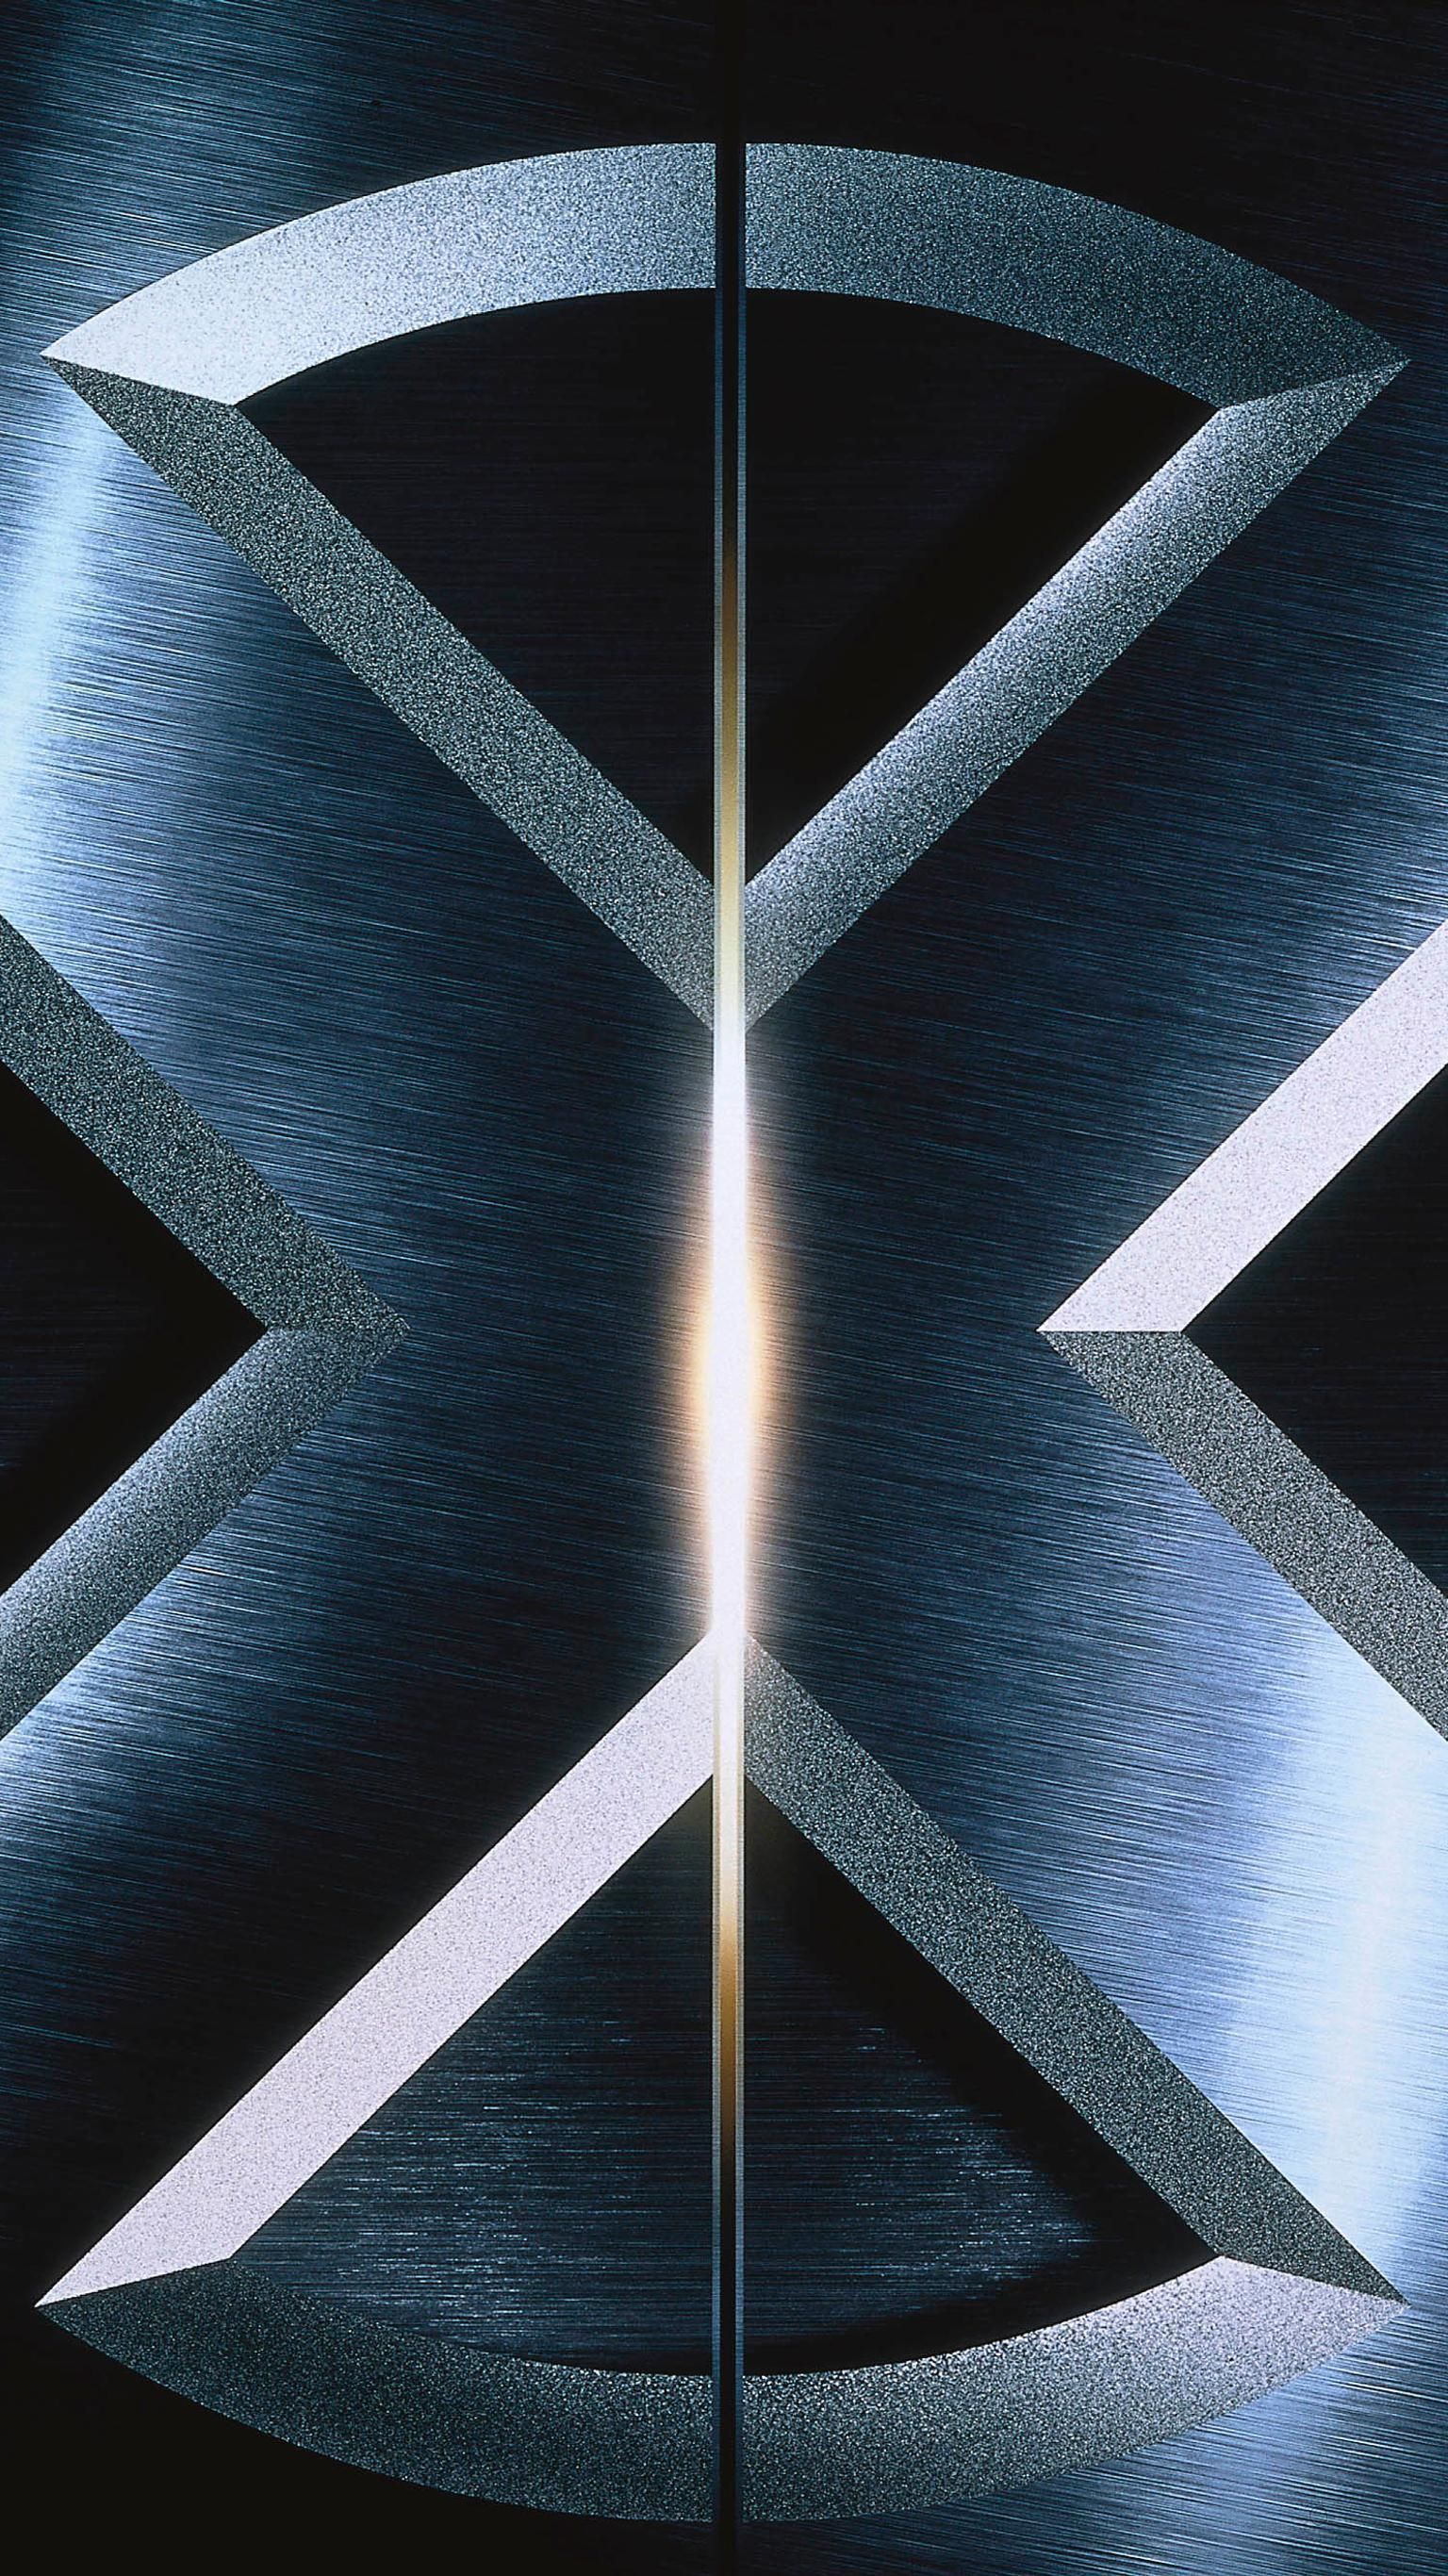 X Men (2000) Phone Wallpaper. Moviemania. X Men Iphone Wallpaper, X Men, IPhone Wallpaper